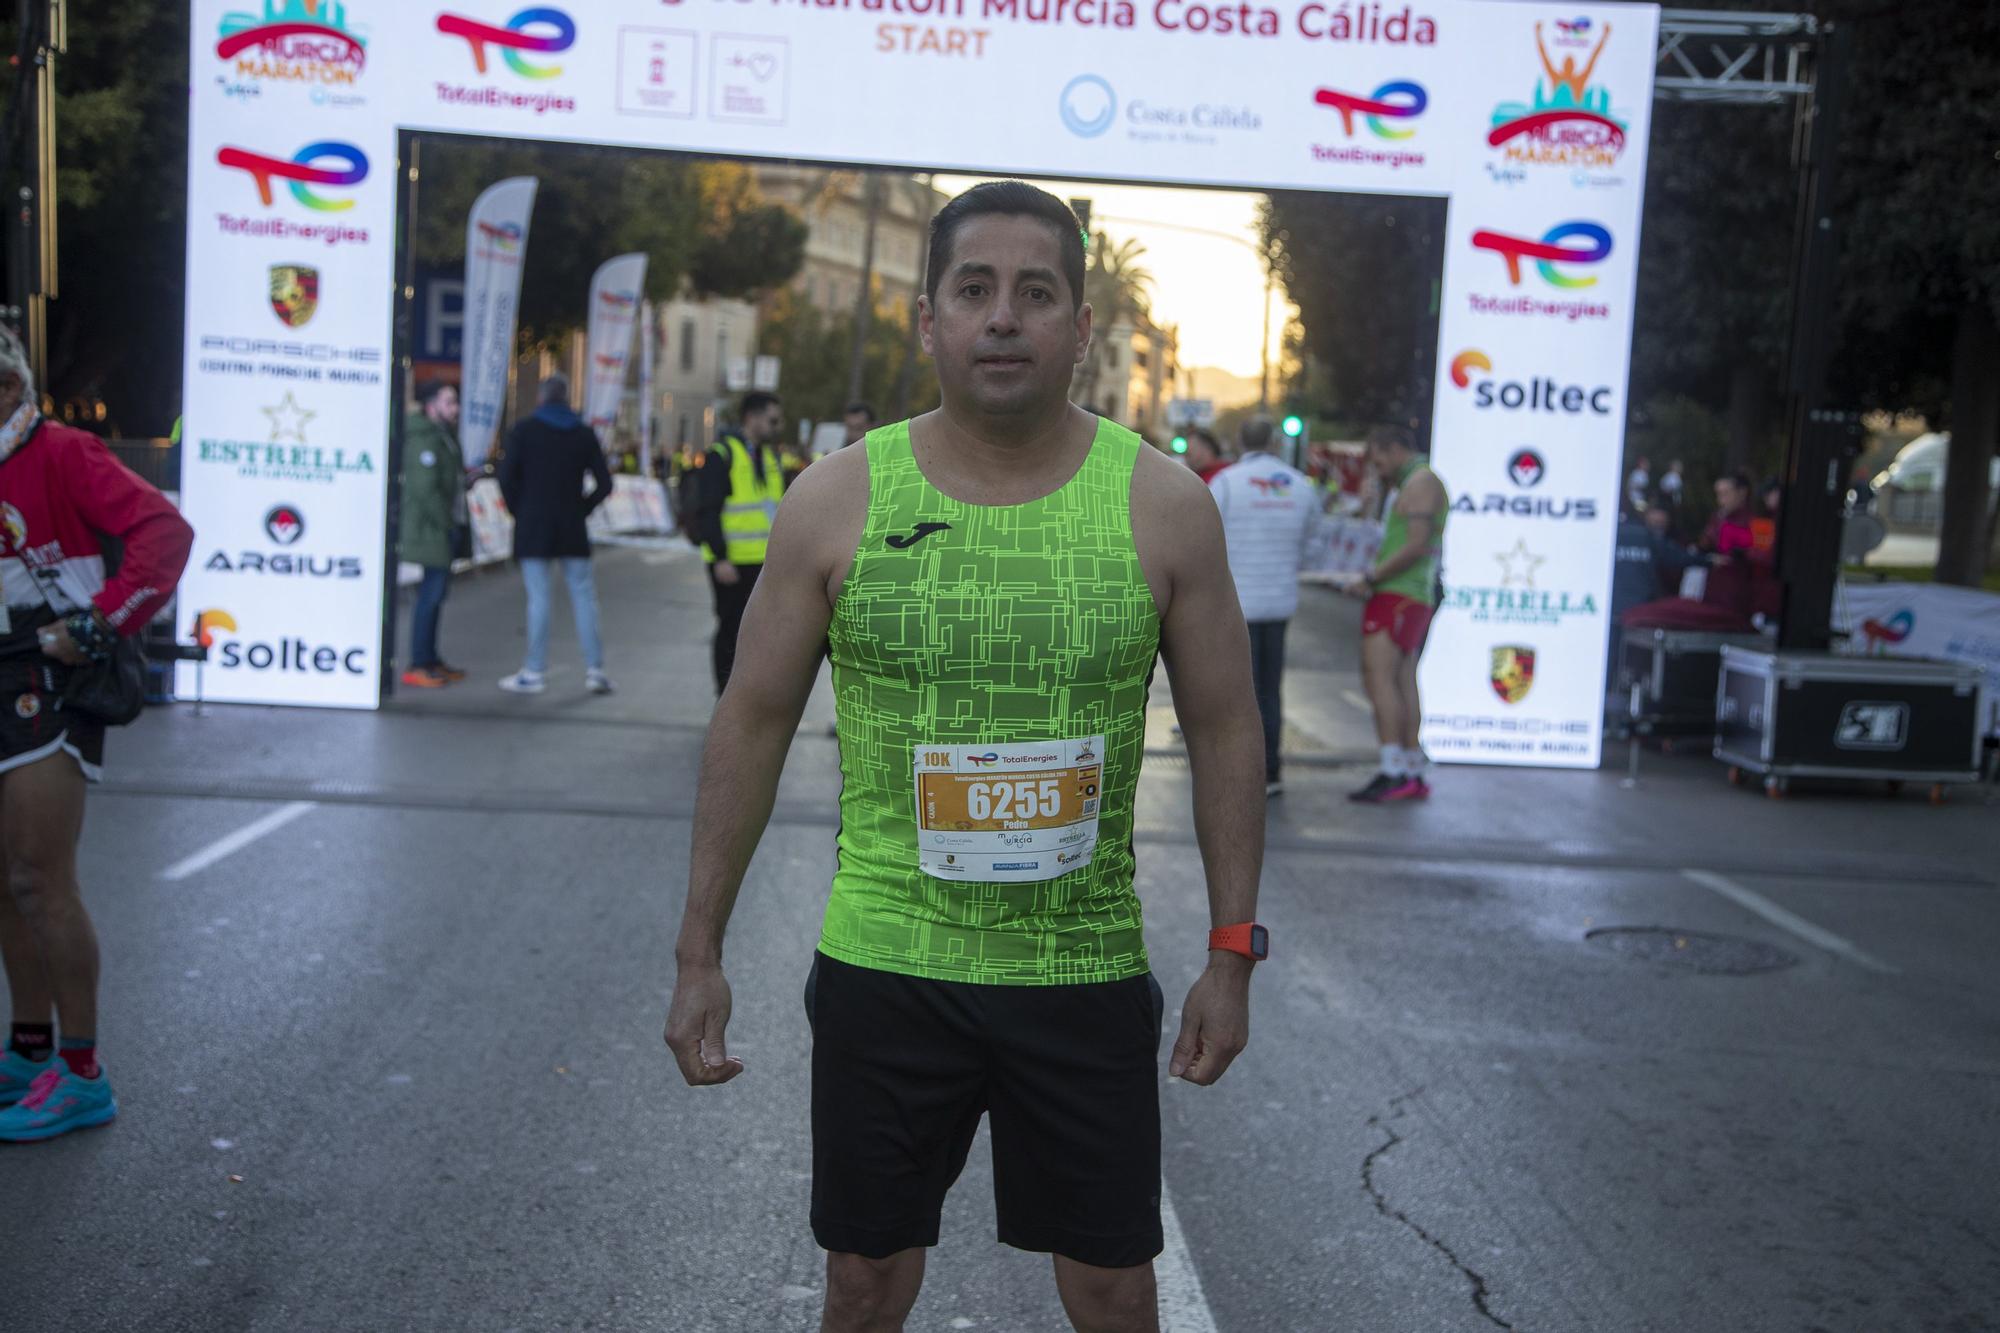 Carrera 10K Maratón Murcia Costa Cálida